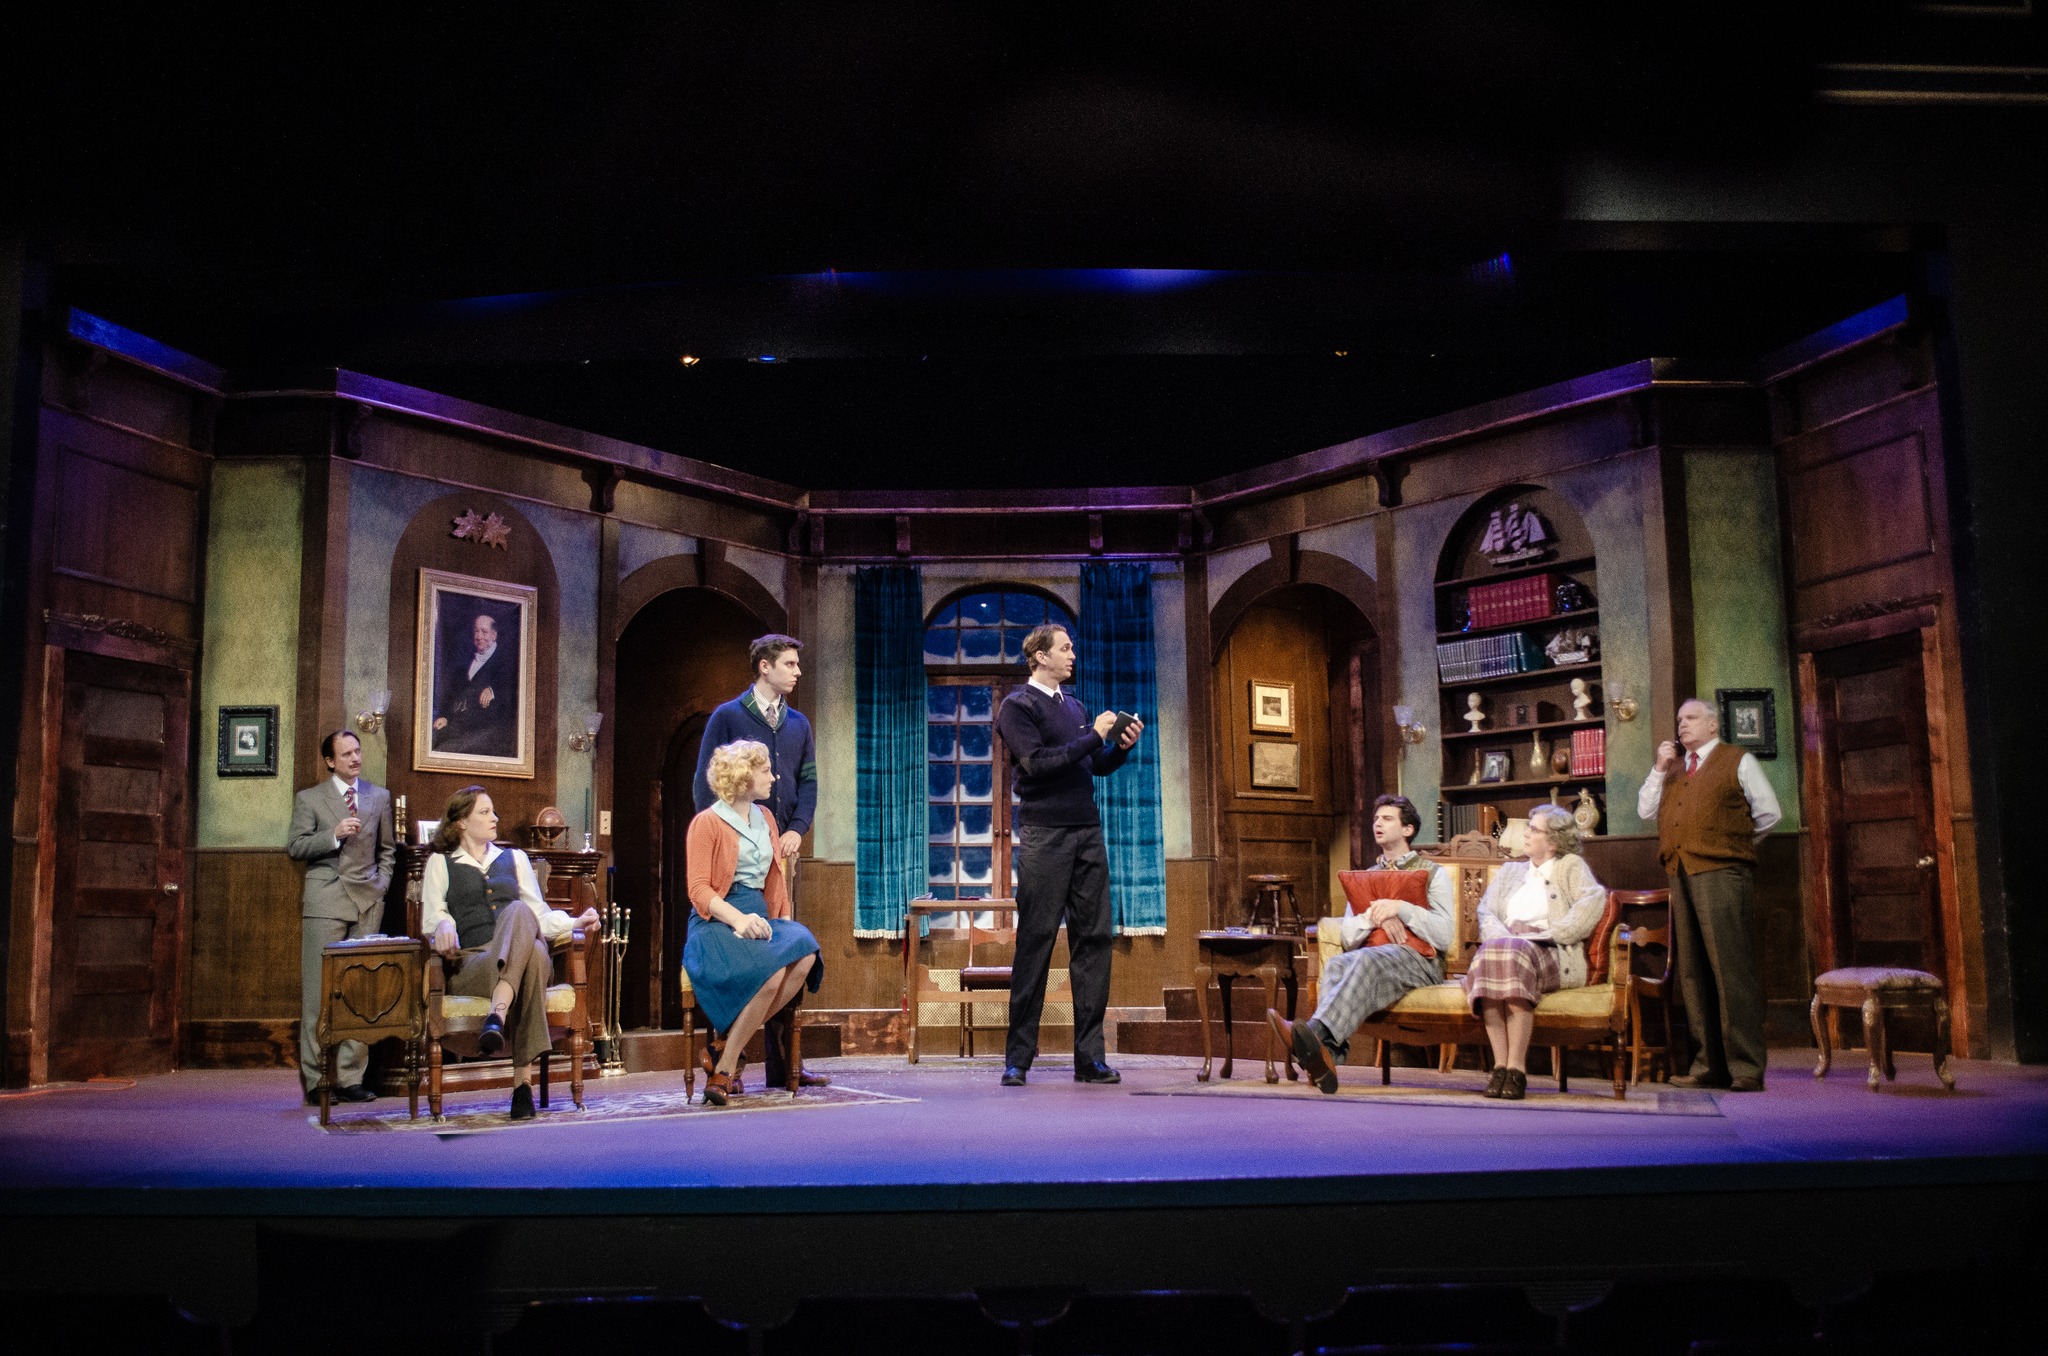 Western Carolina University - Agatha Christie play 'The Mousetrap